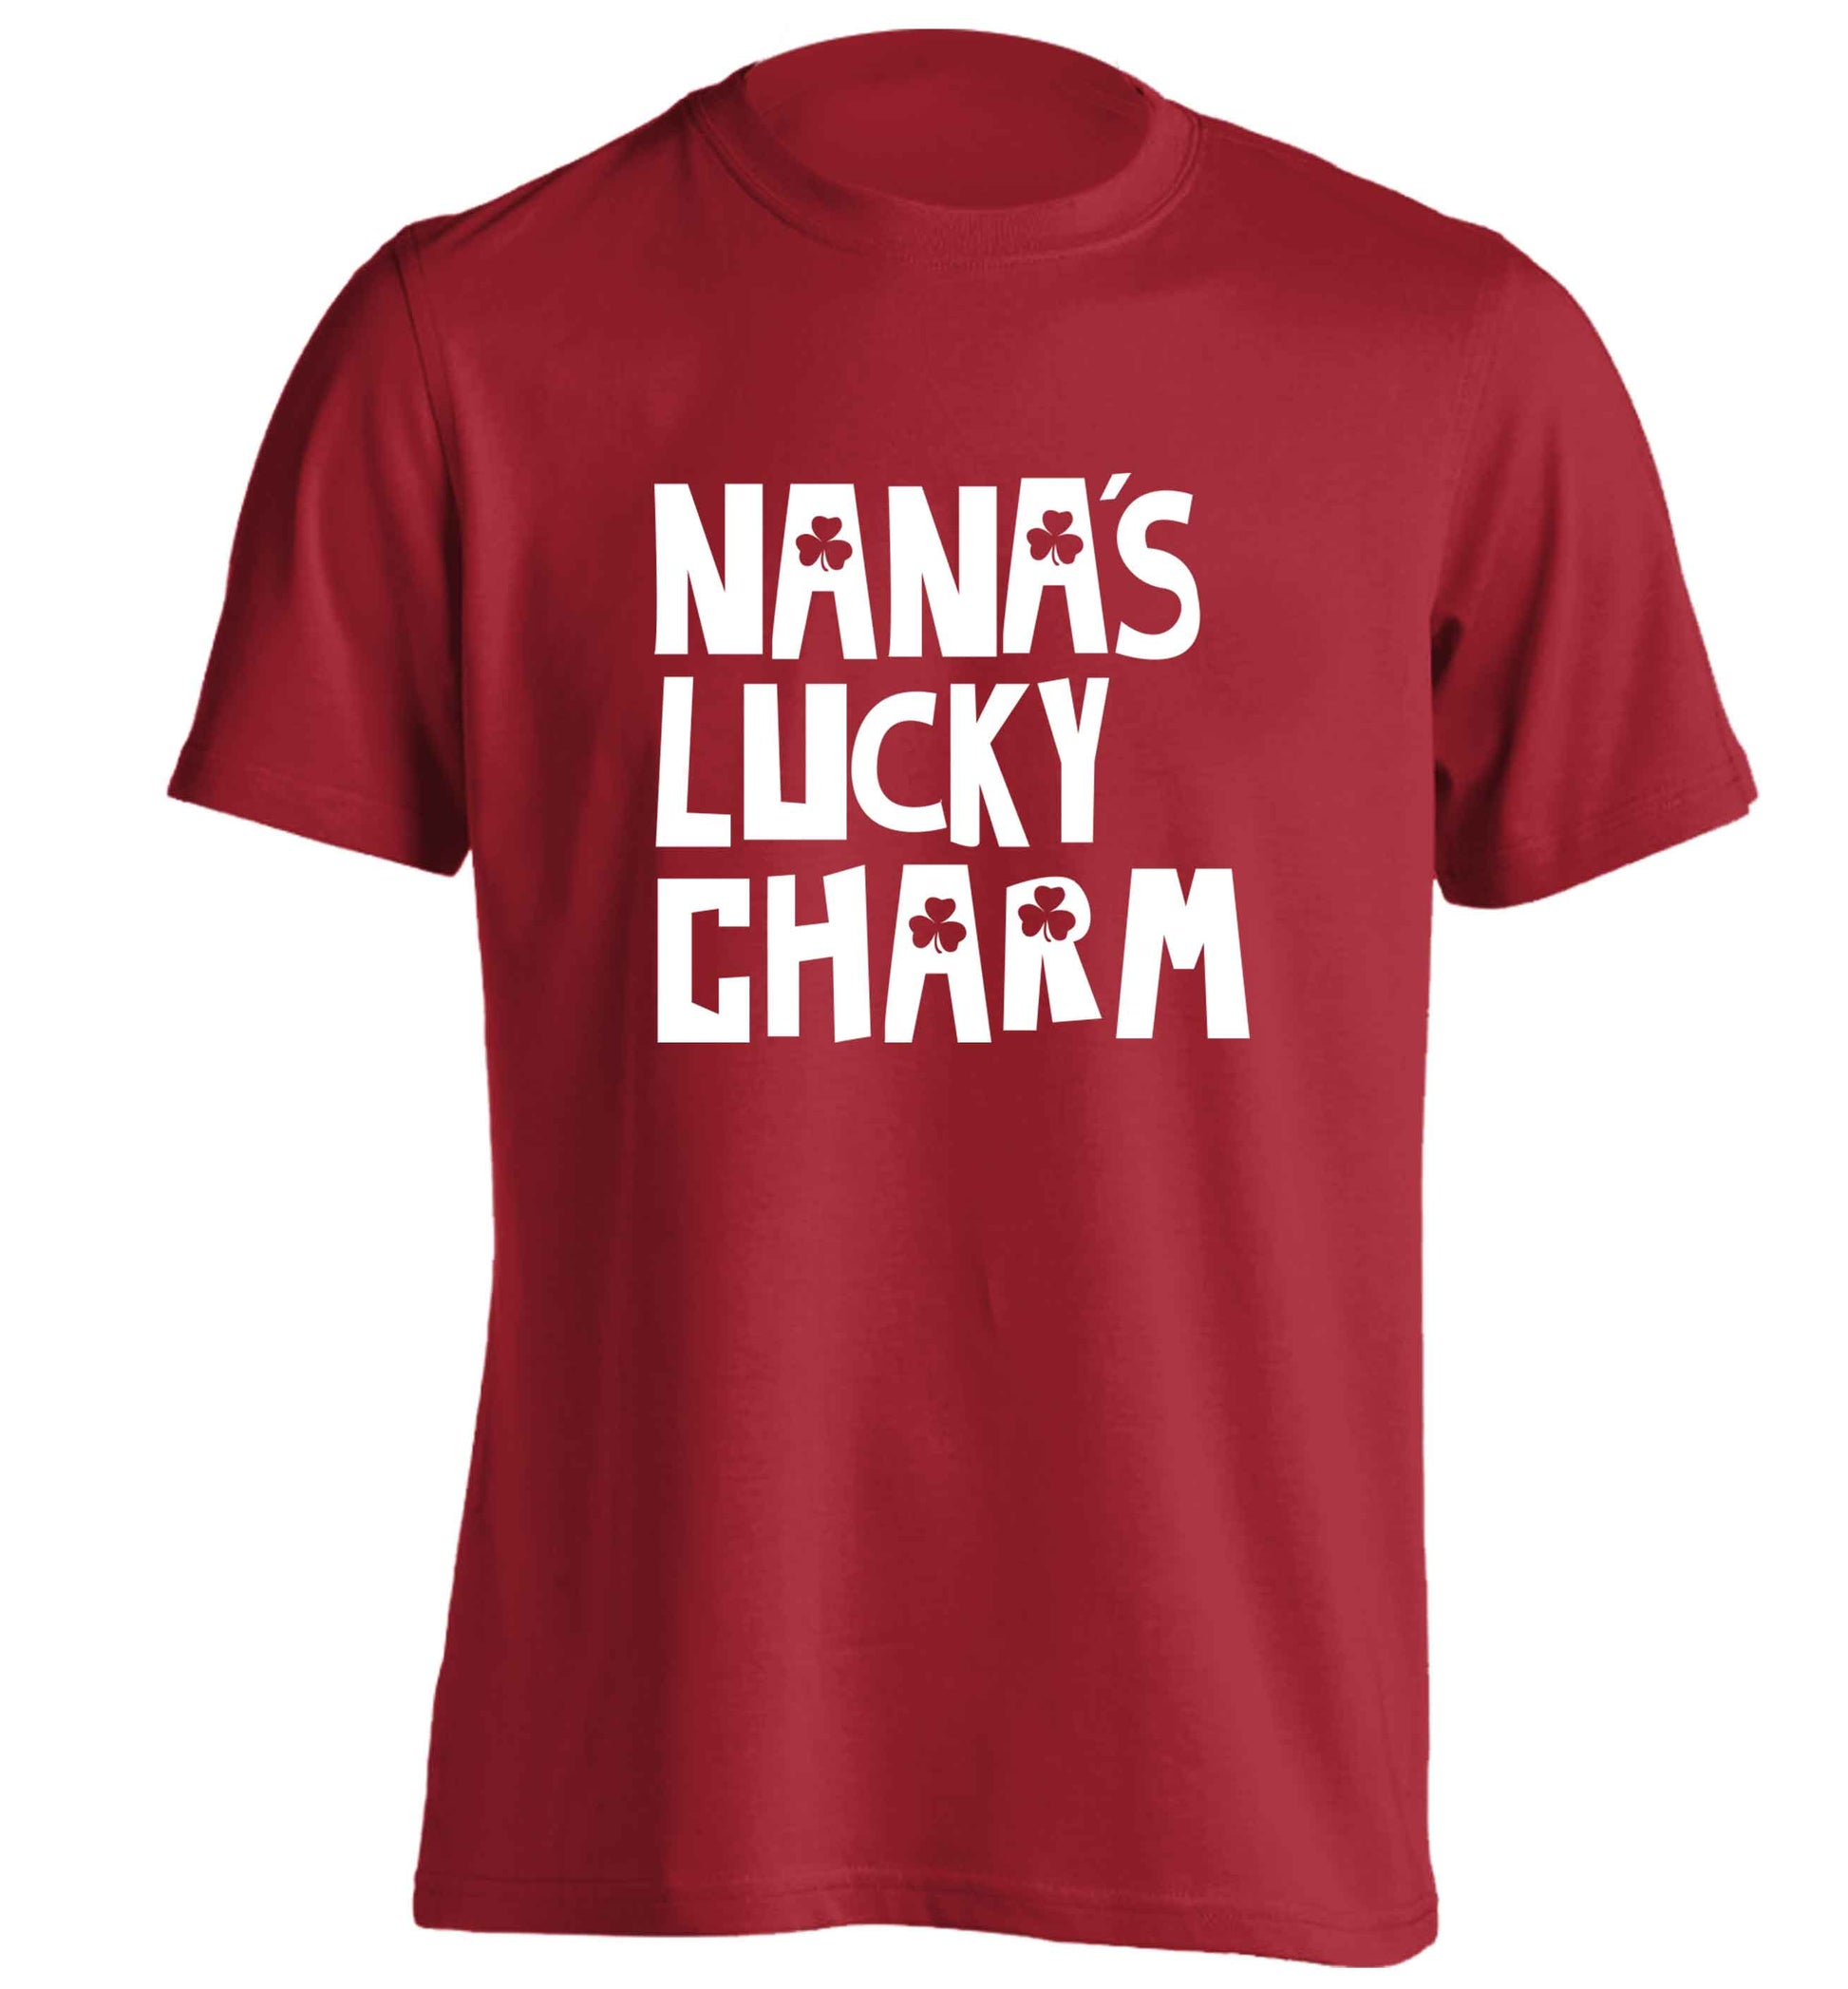 Nana's lucky charm adults unisex red Tshirt 2XL